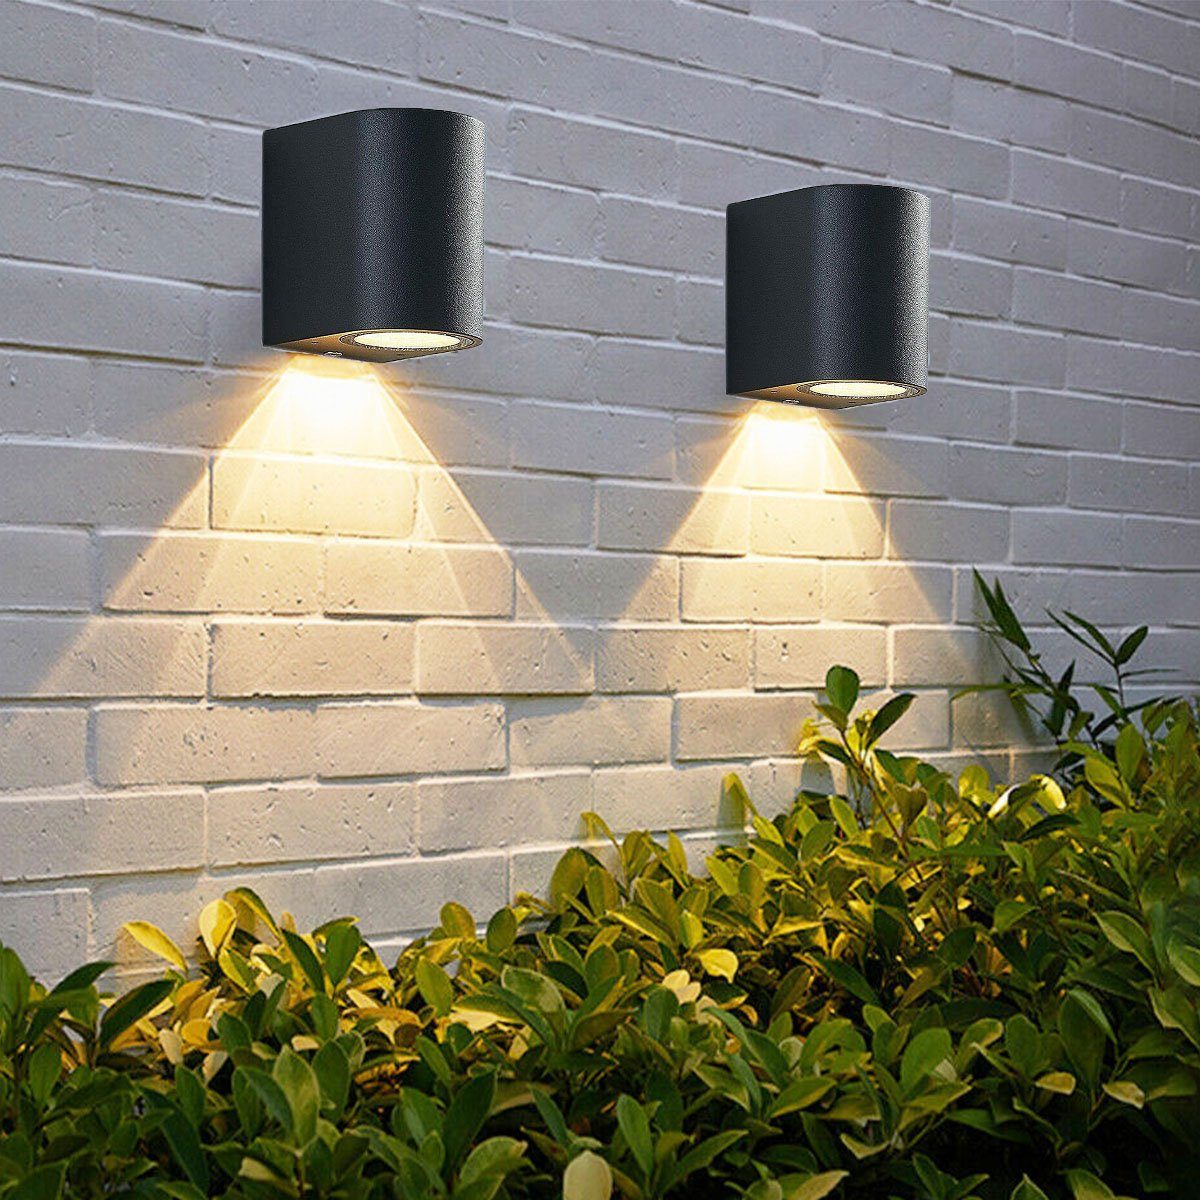 Wandleuchte Moderne Schwarz Zylinder Strahler oyajia Außenleuchte Fassadenbeleuchtung Bad LED 230V, Warmweiß, 2x inkl. Wandspot LED Lampe Wandleuchte GU10 wechselbar, IP54, Aussenwandleuchte Glühbirne LED